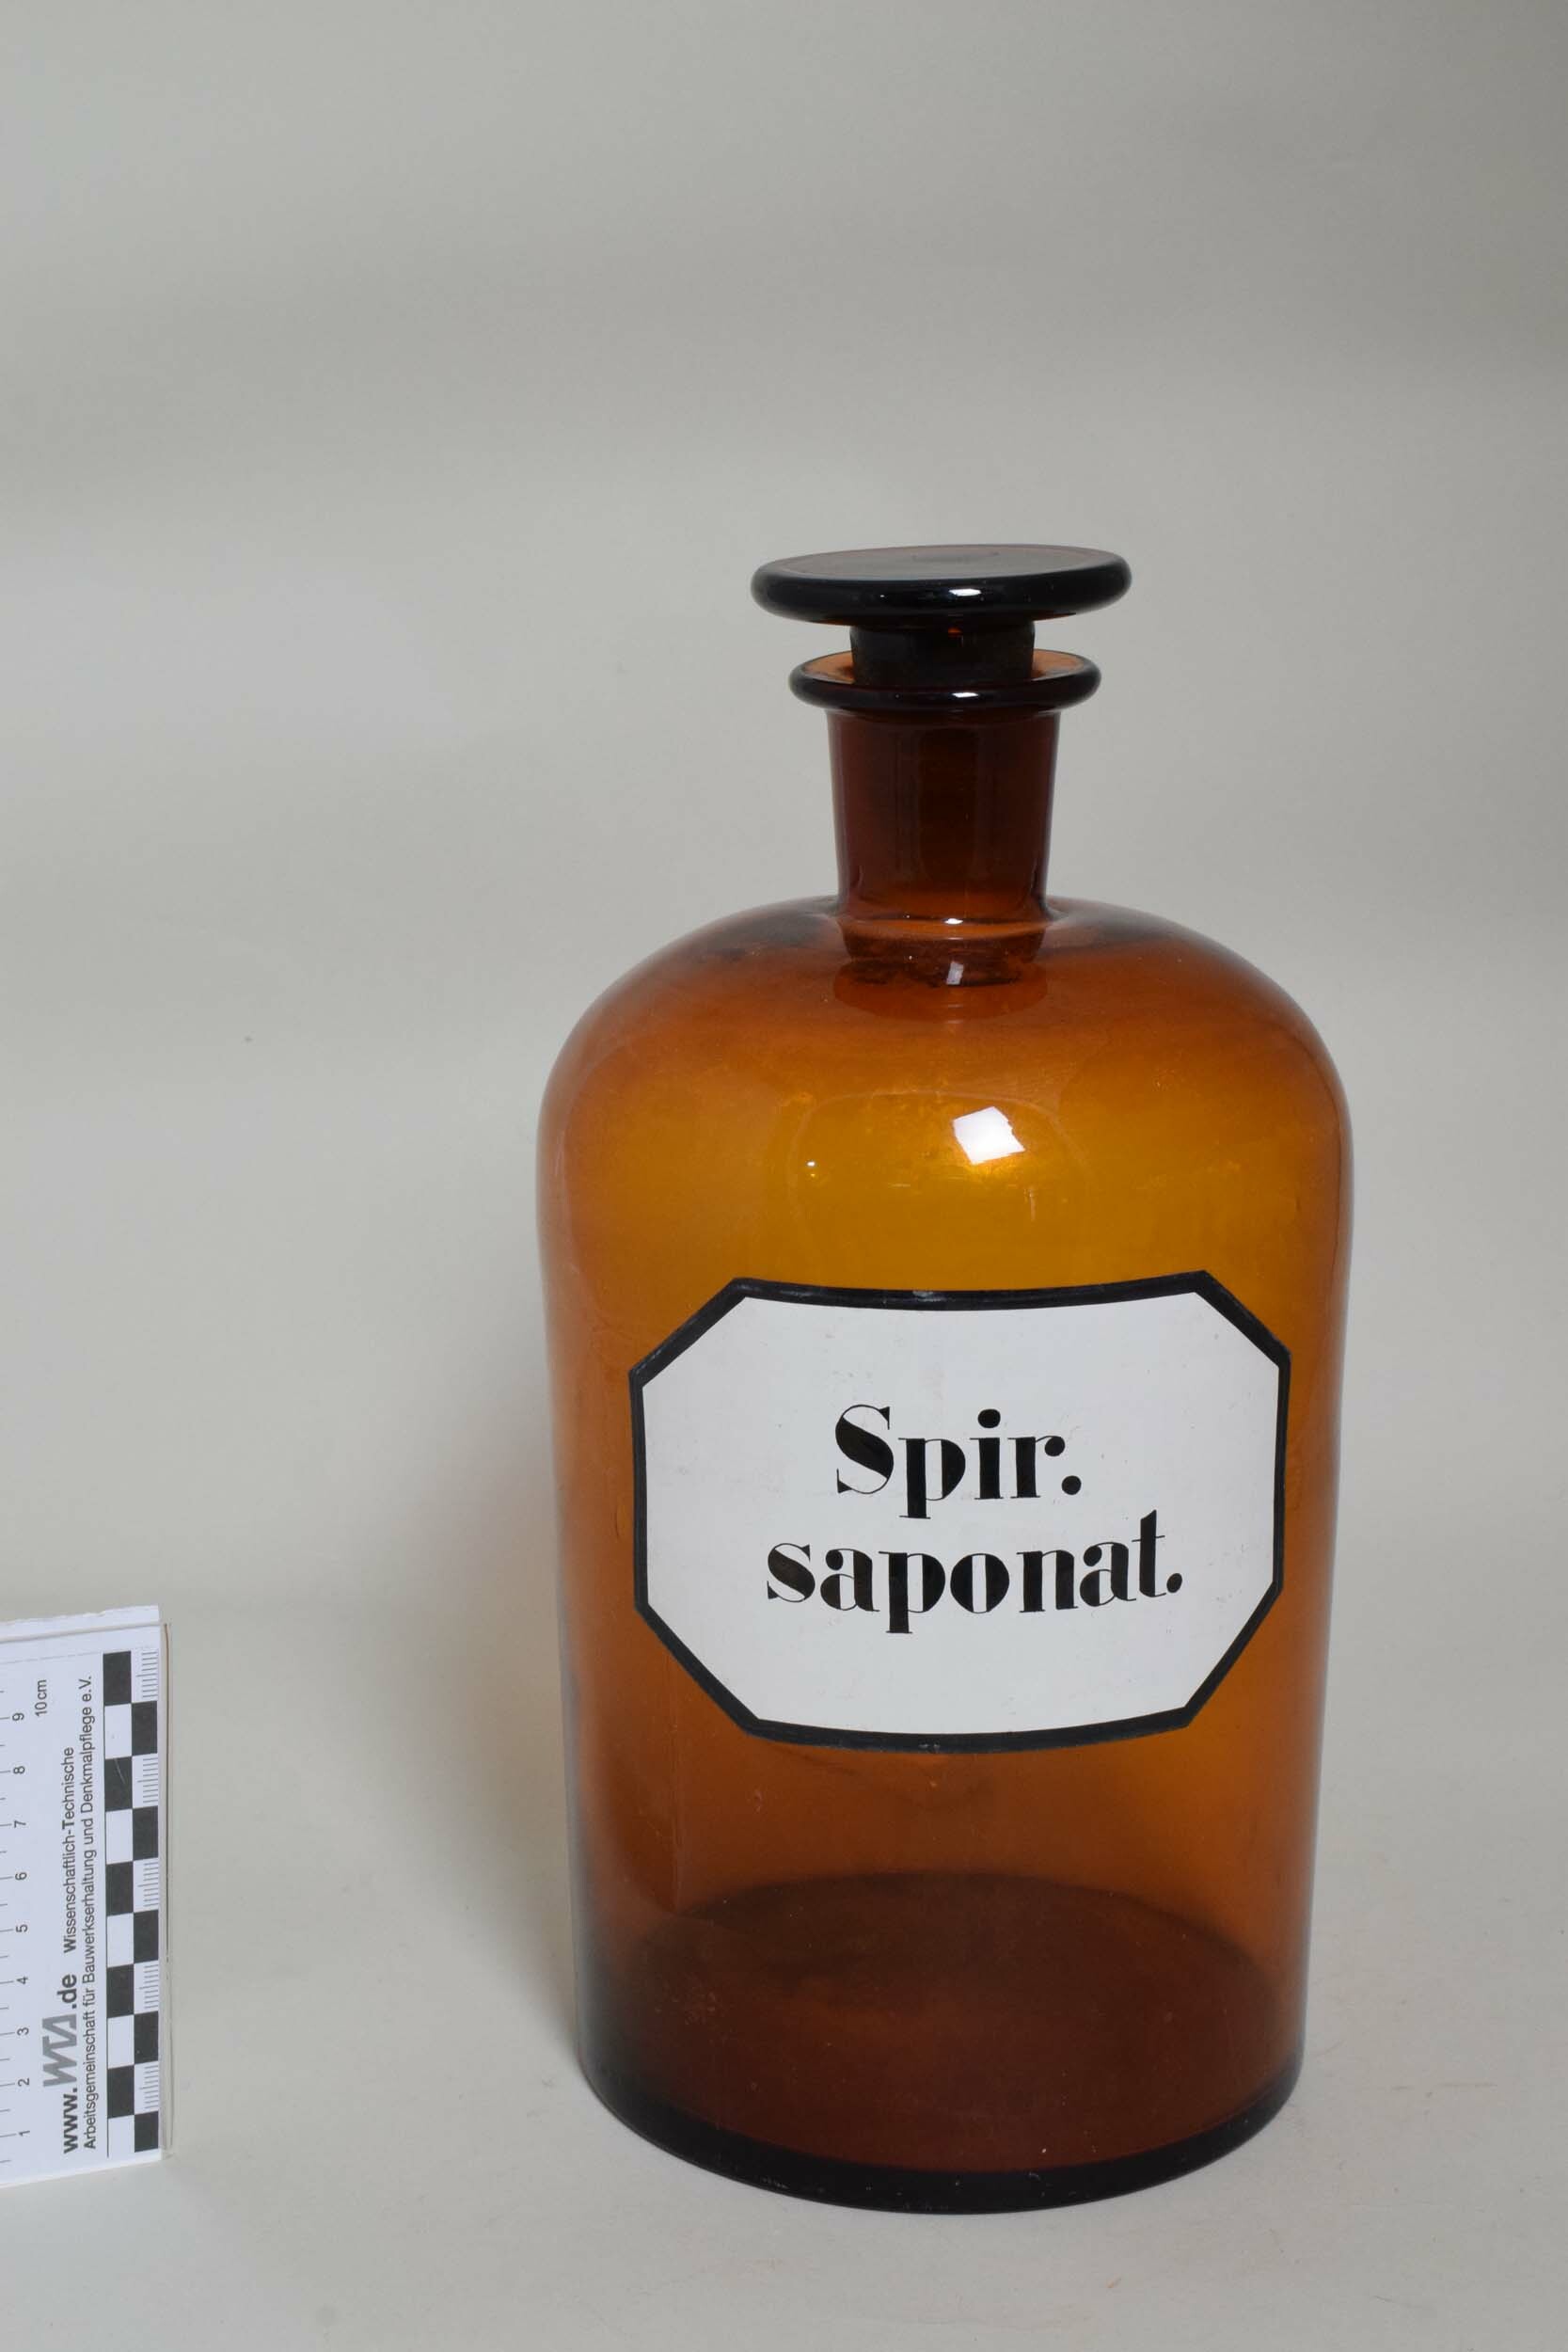 Apothekenflasche "Spir. saponat." (Heimatmuseum Dohna CC BY-NC-SA)